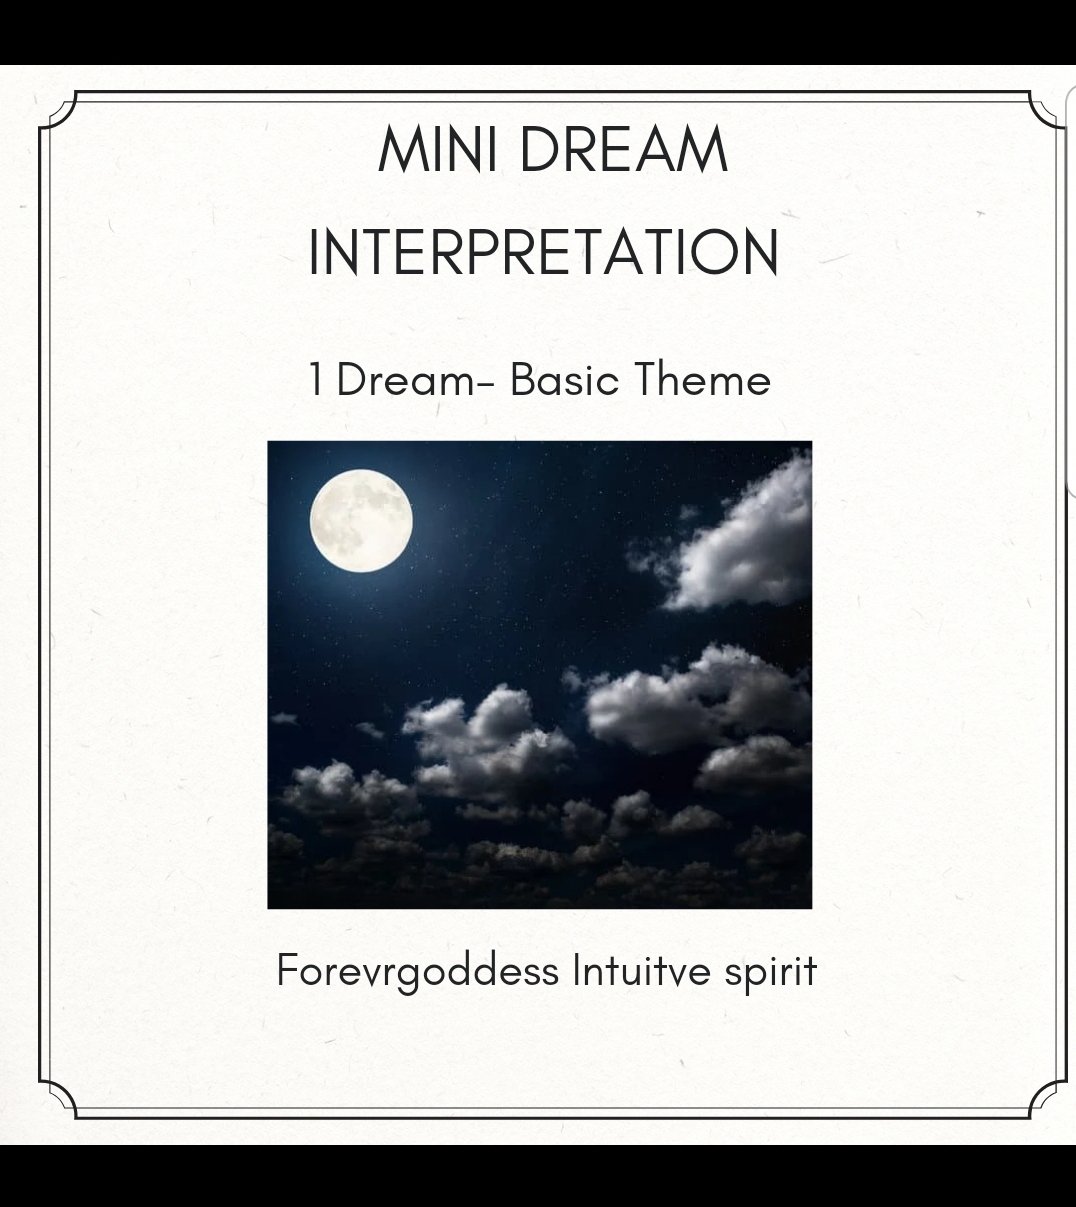 Mini dream interpretation 2